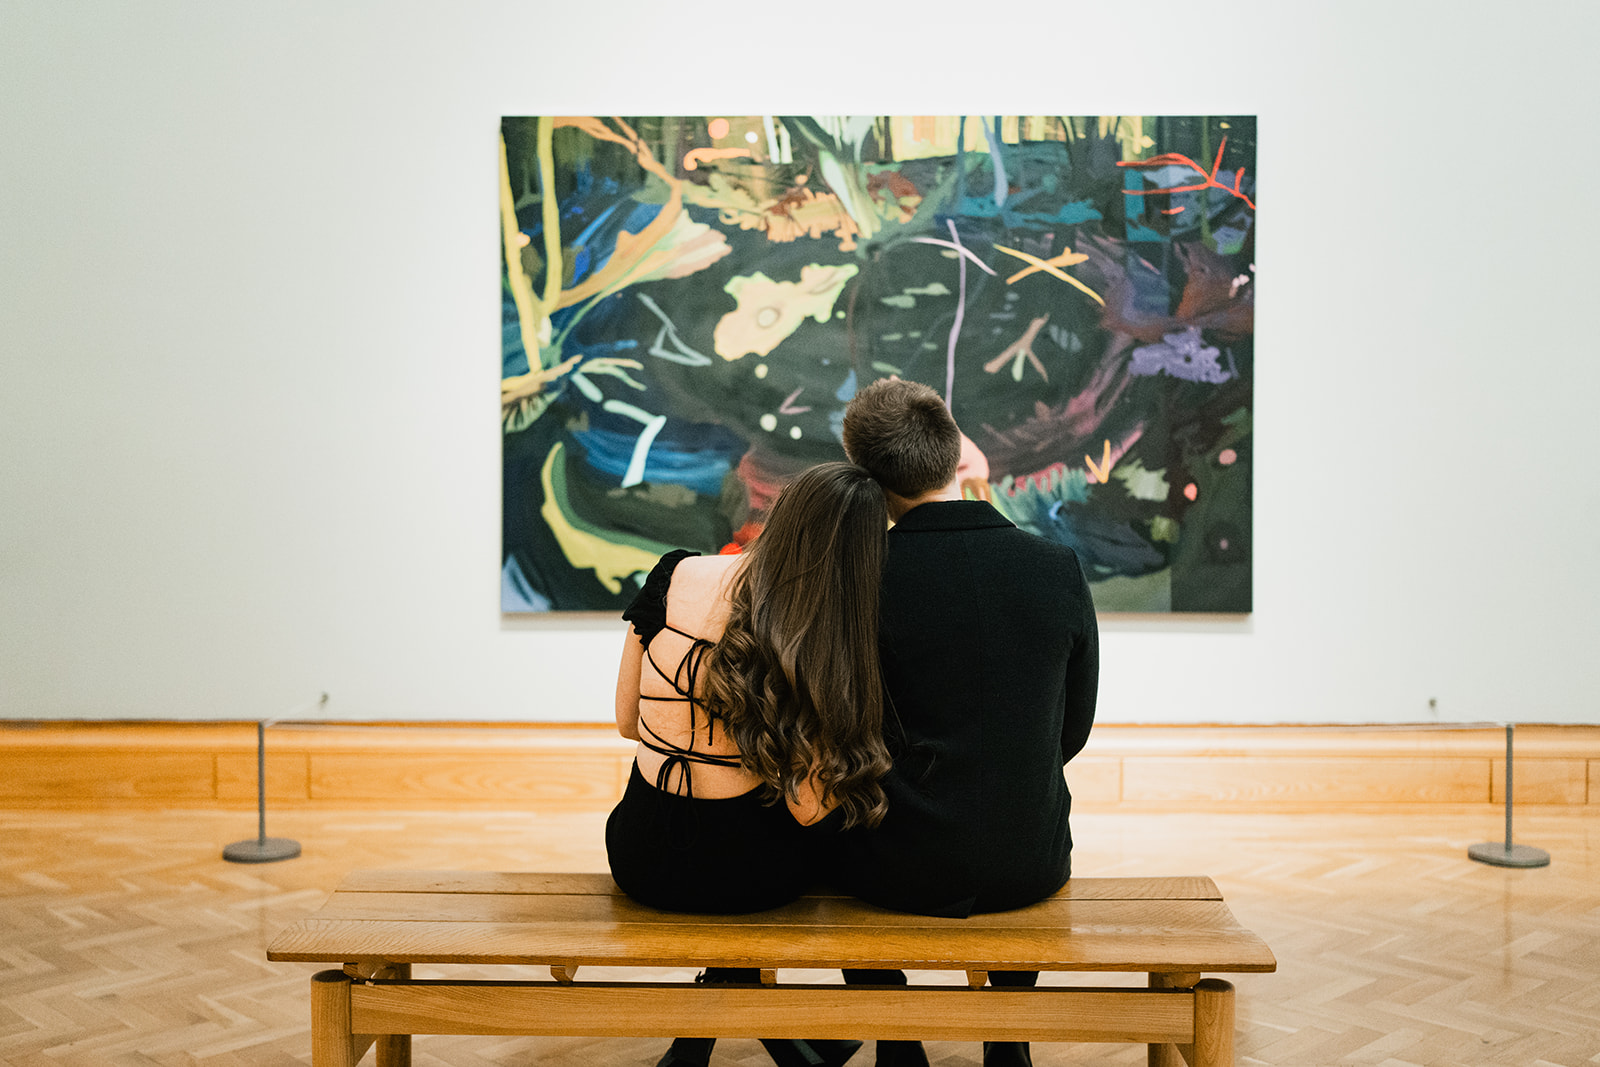 couple admiring art work in an art gallery cardiff